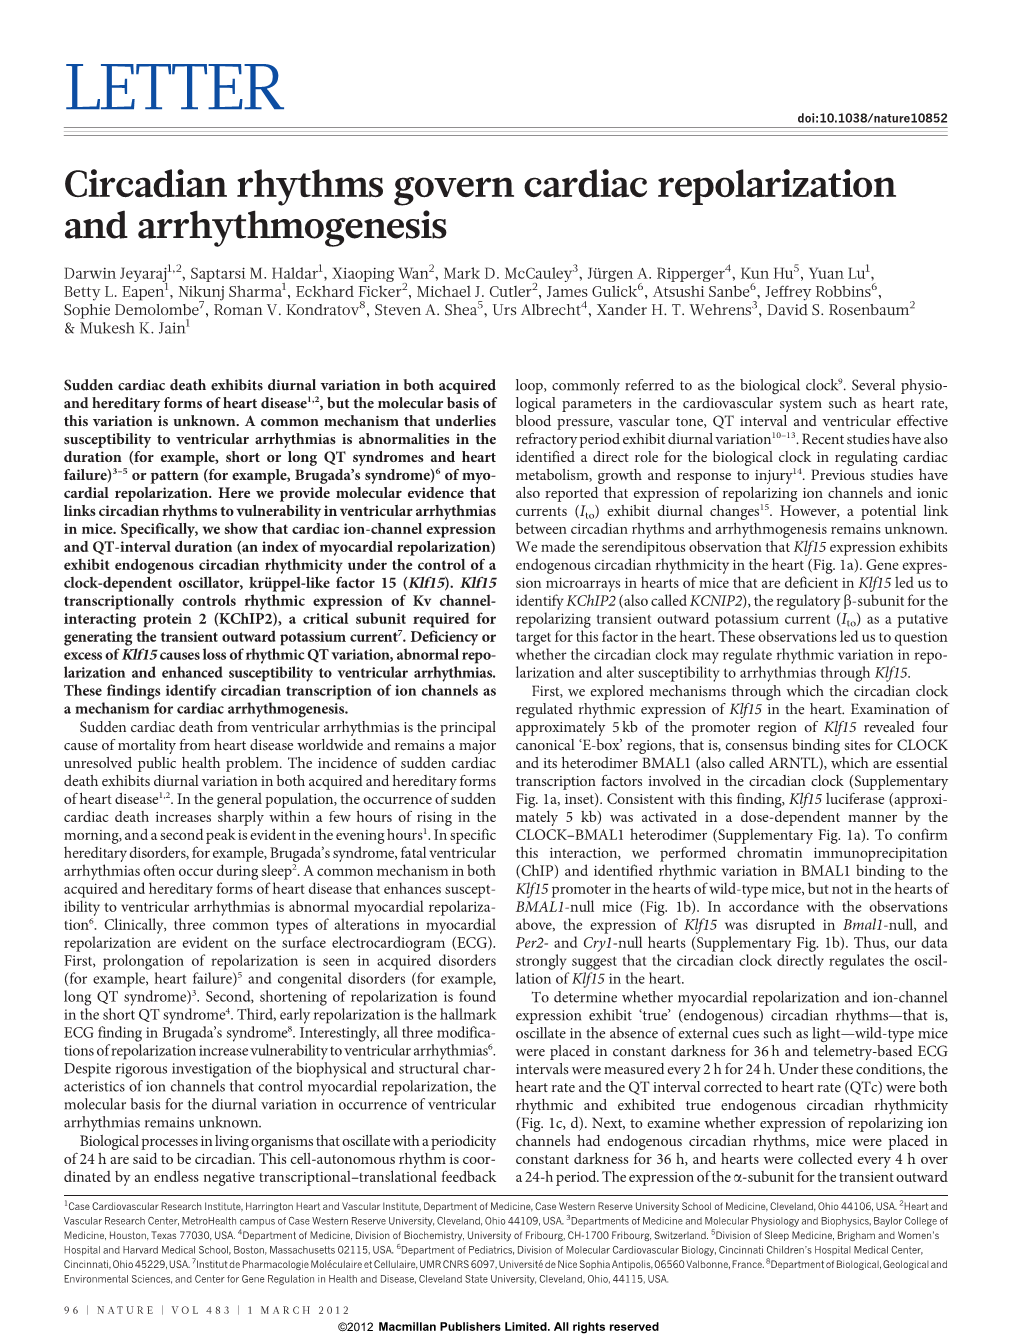 Circadian Rhythms Govern Cardiac Repolarization and Arrhythmogenesis